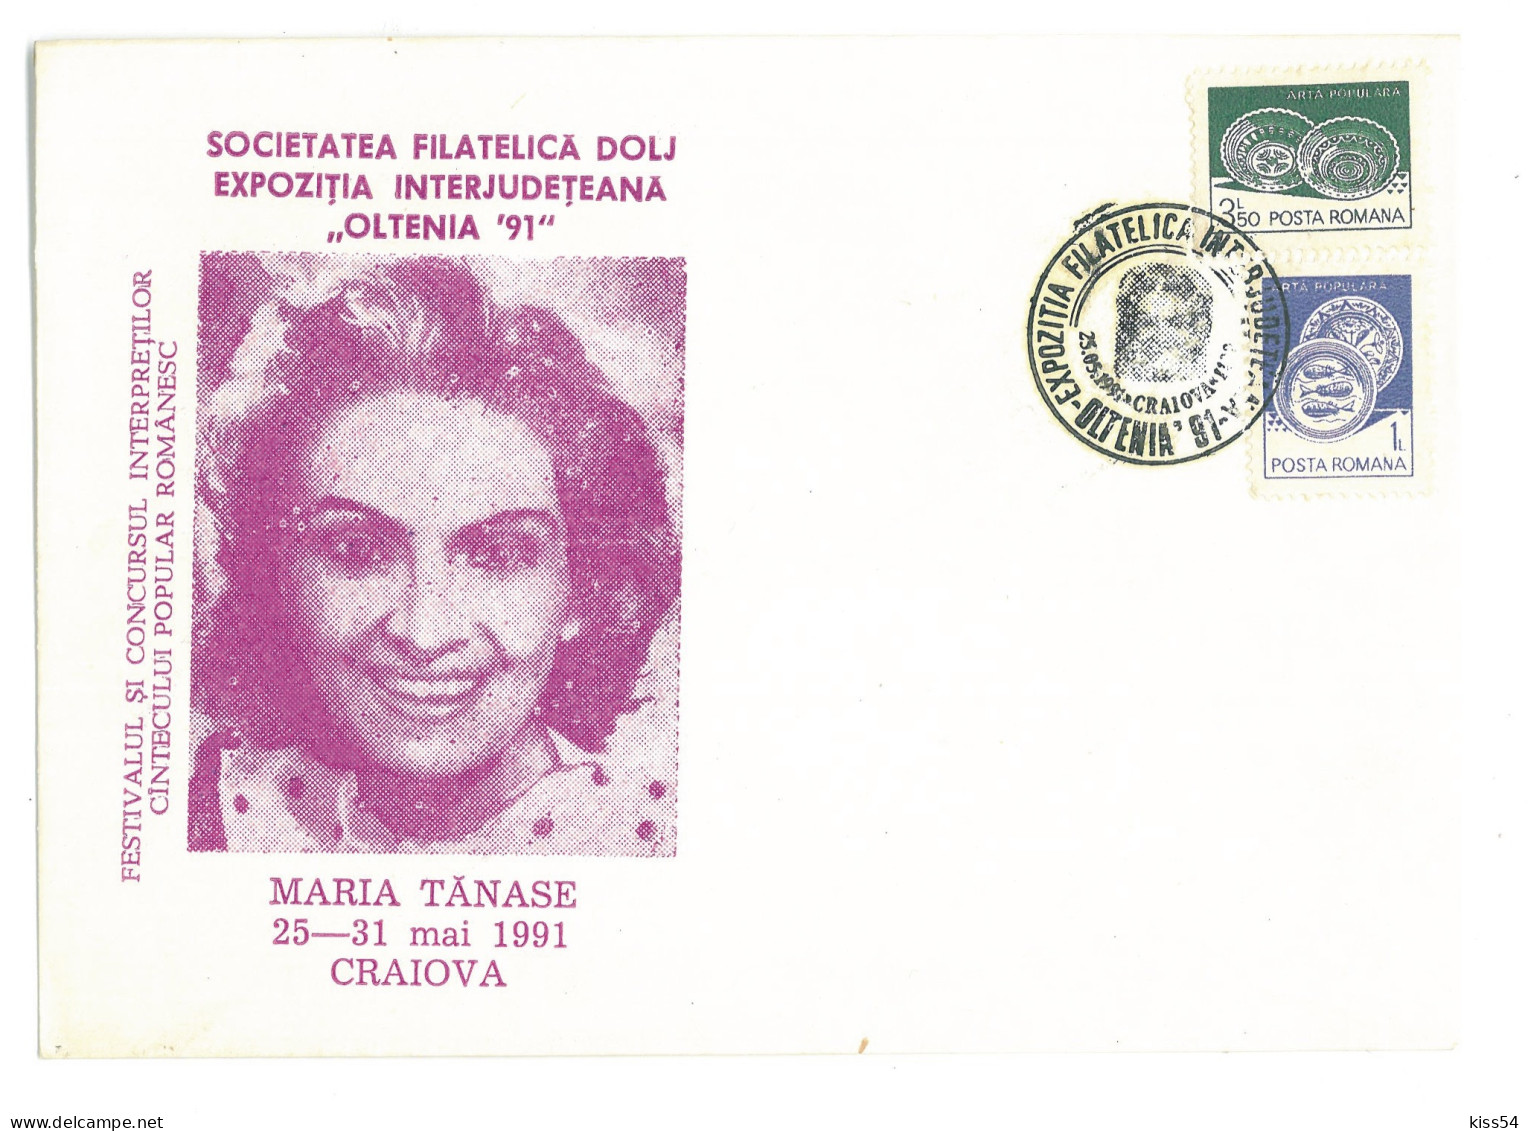 COV 88 - 3027 MARIA TANASE, The Popular Song, Romania - Cover - Used - 1991 - Briefe U. Dokumente